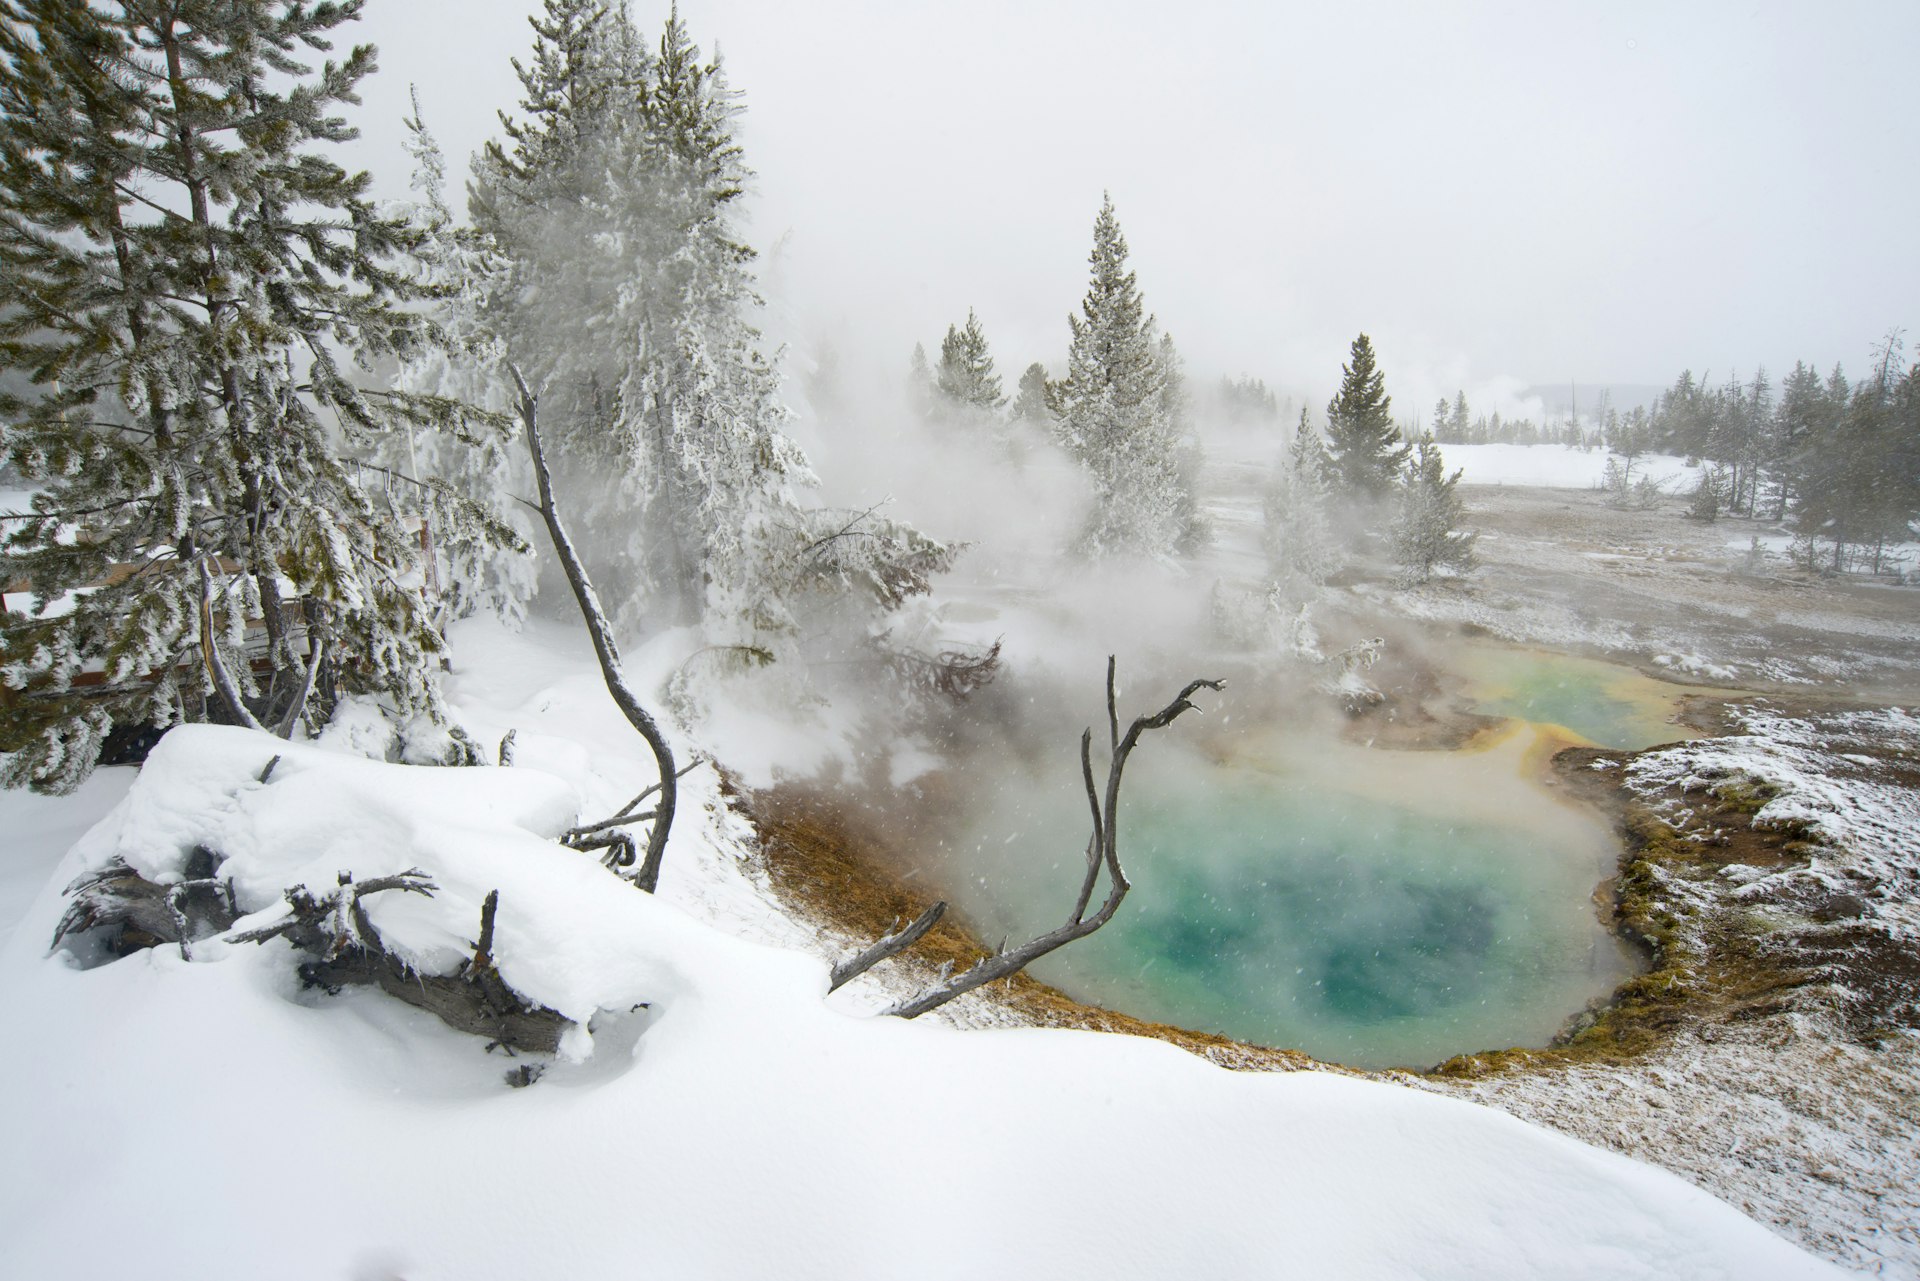 Thermal springs at Yellowstone National Park.